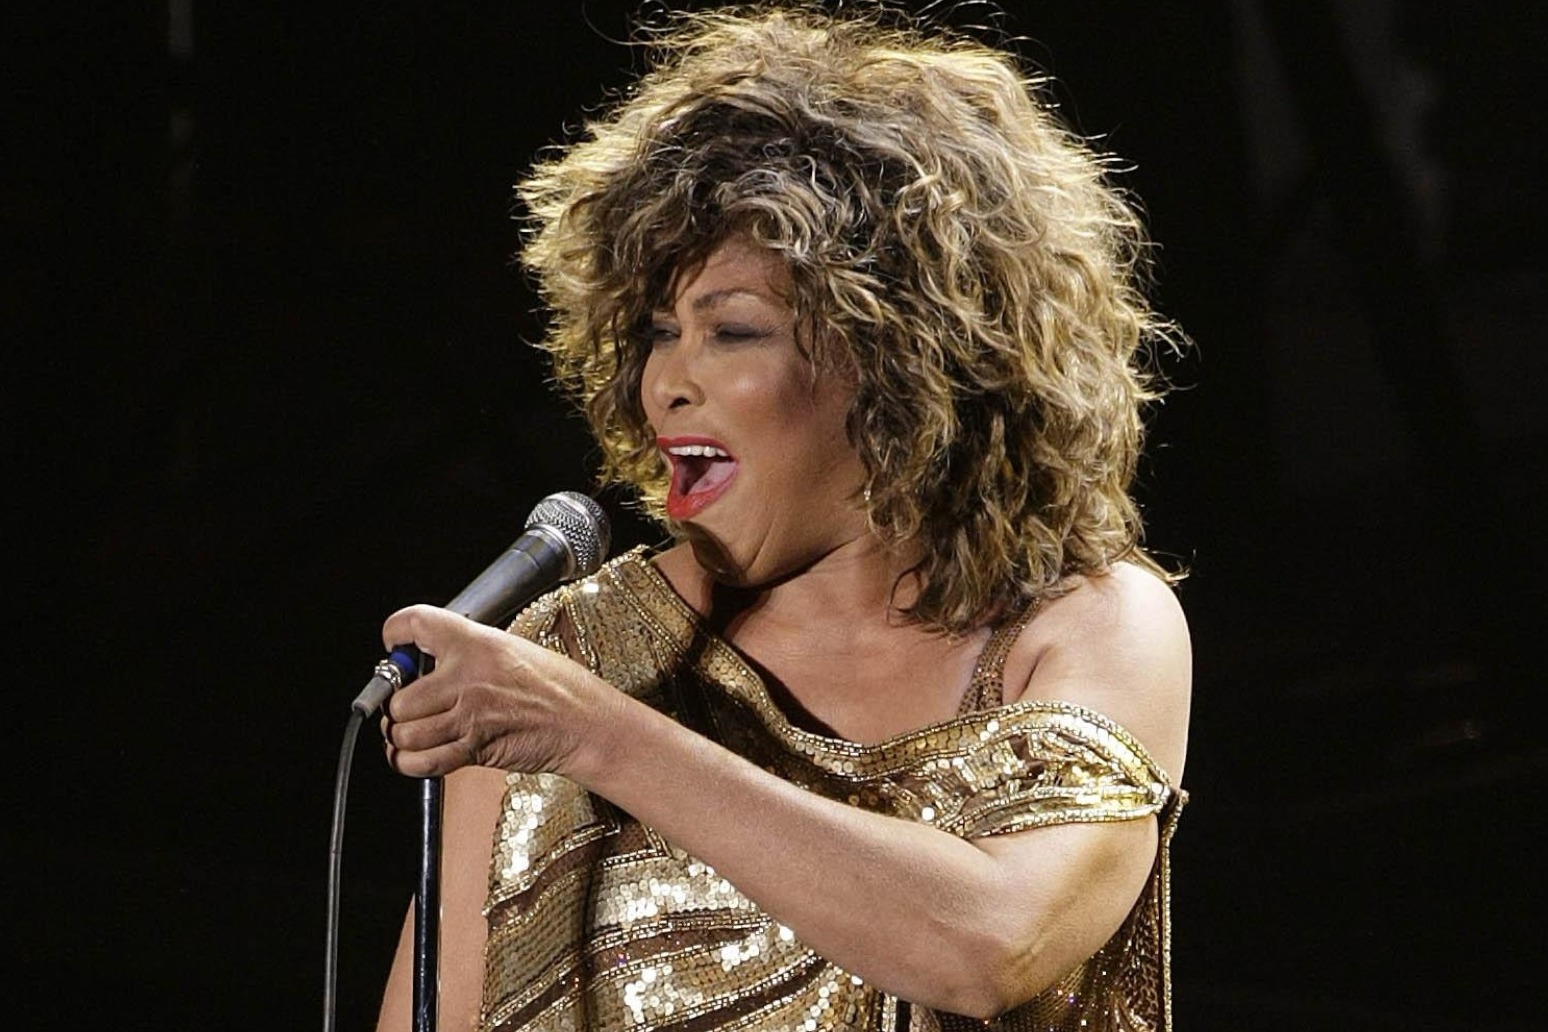 Singer Tina Turner dies at the age of 83 